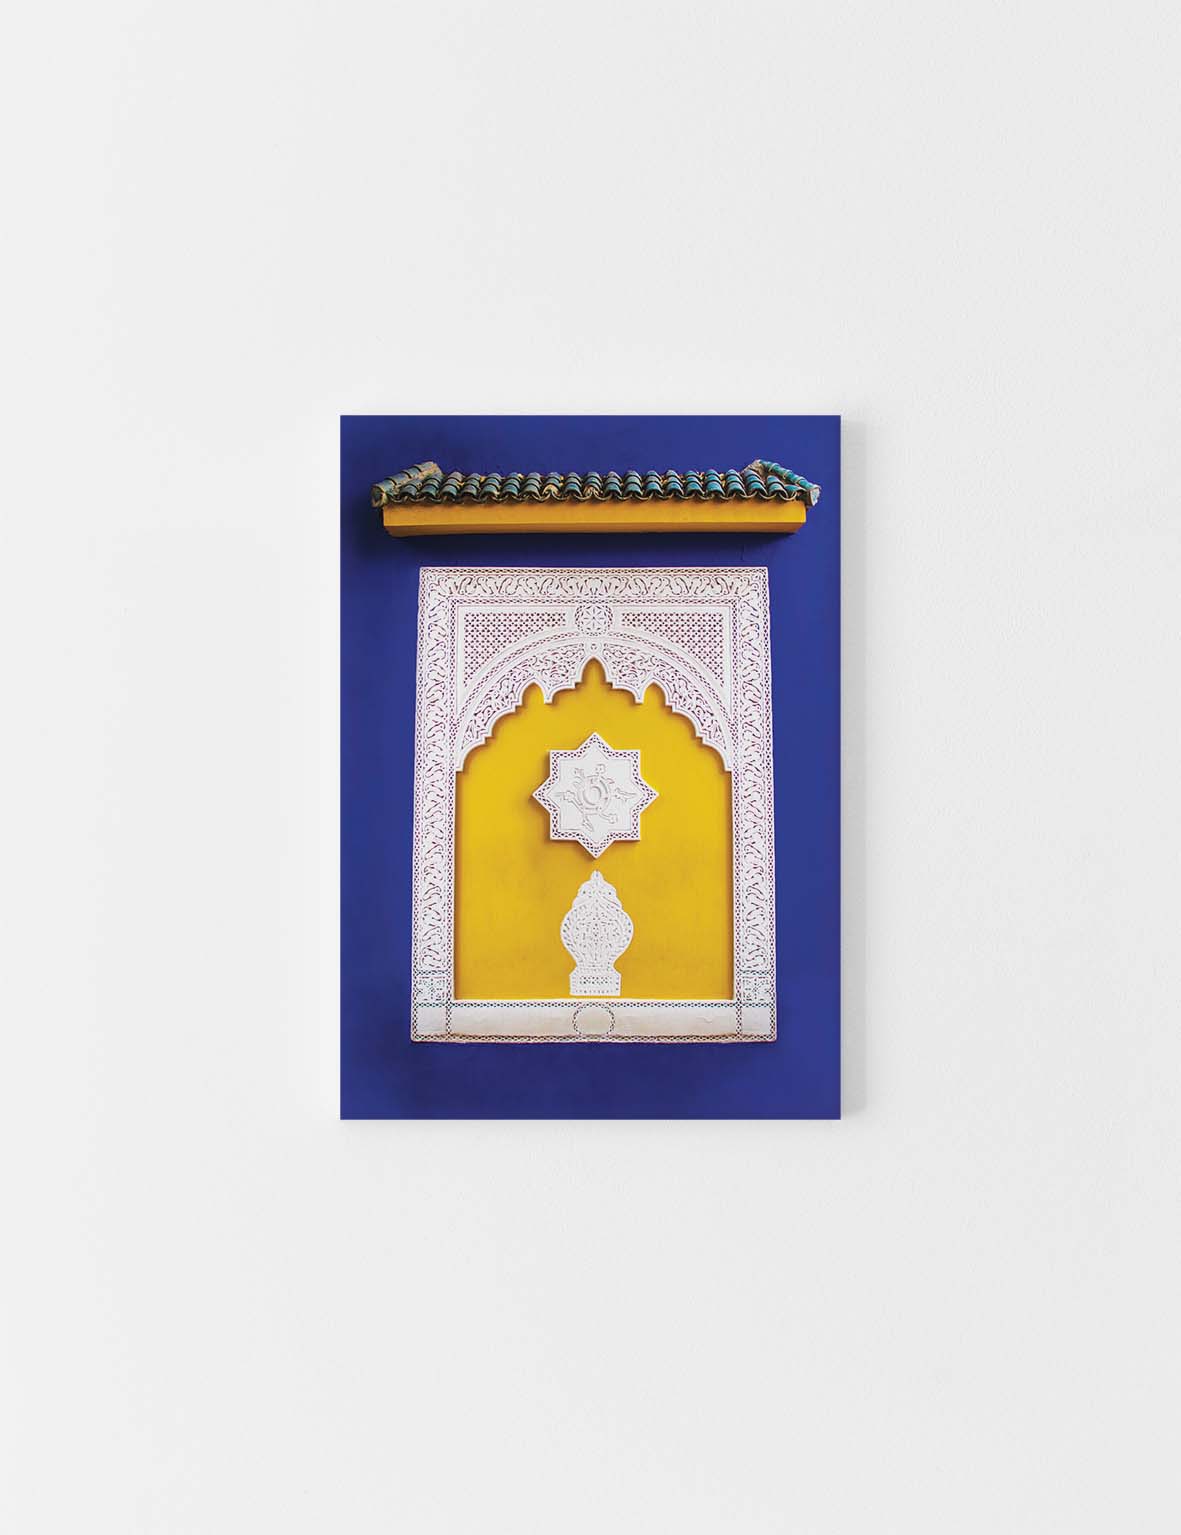 CANVAS | Marrakech Ornament | Morocco 2018